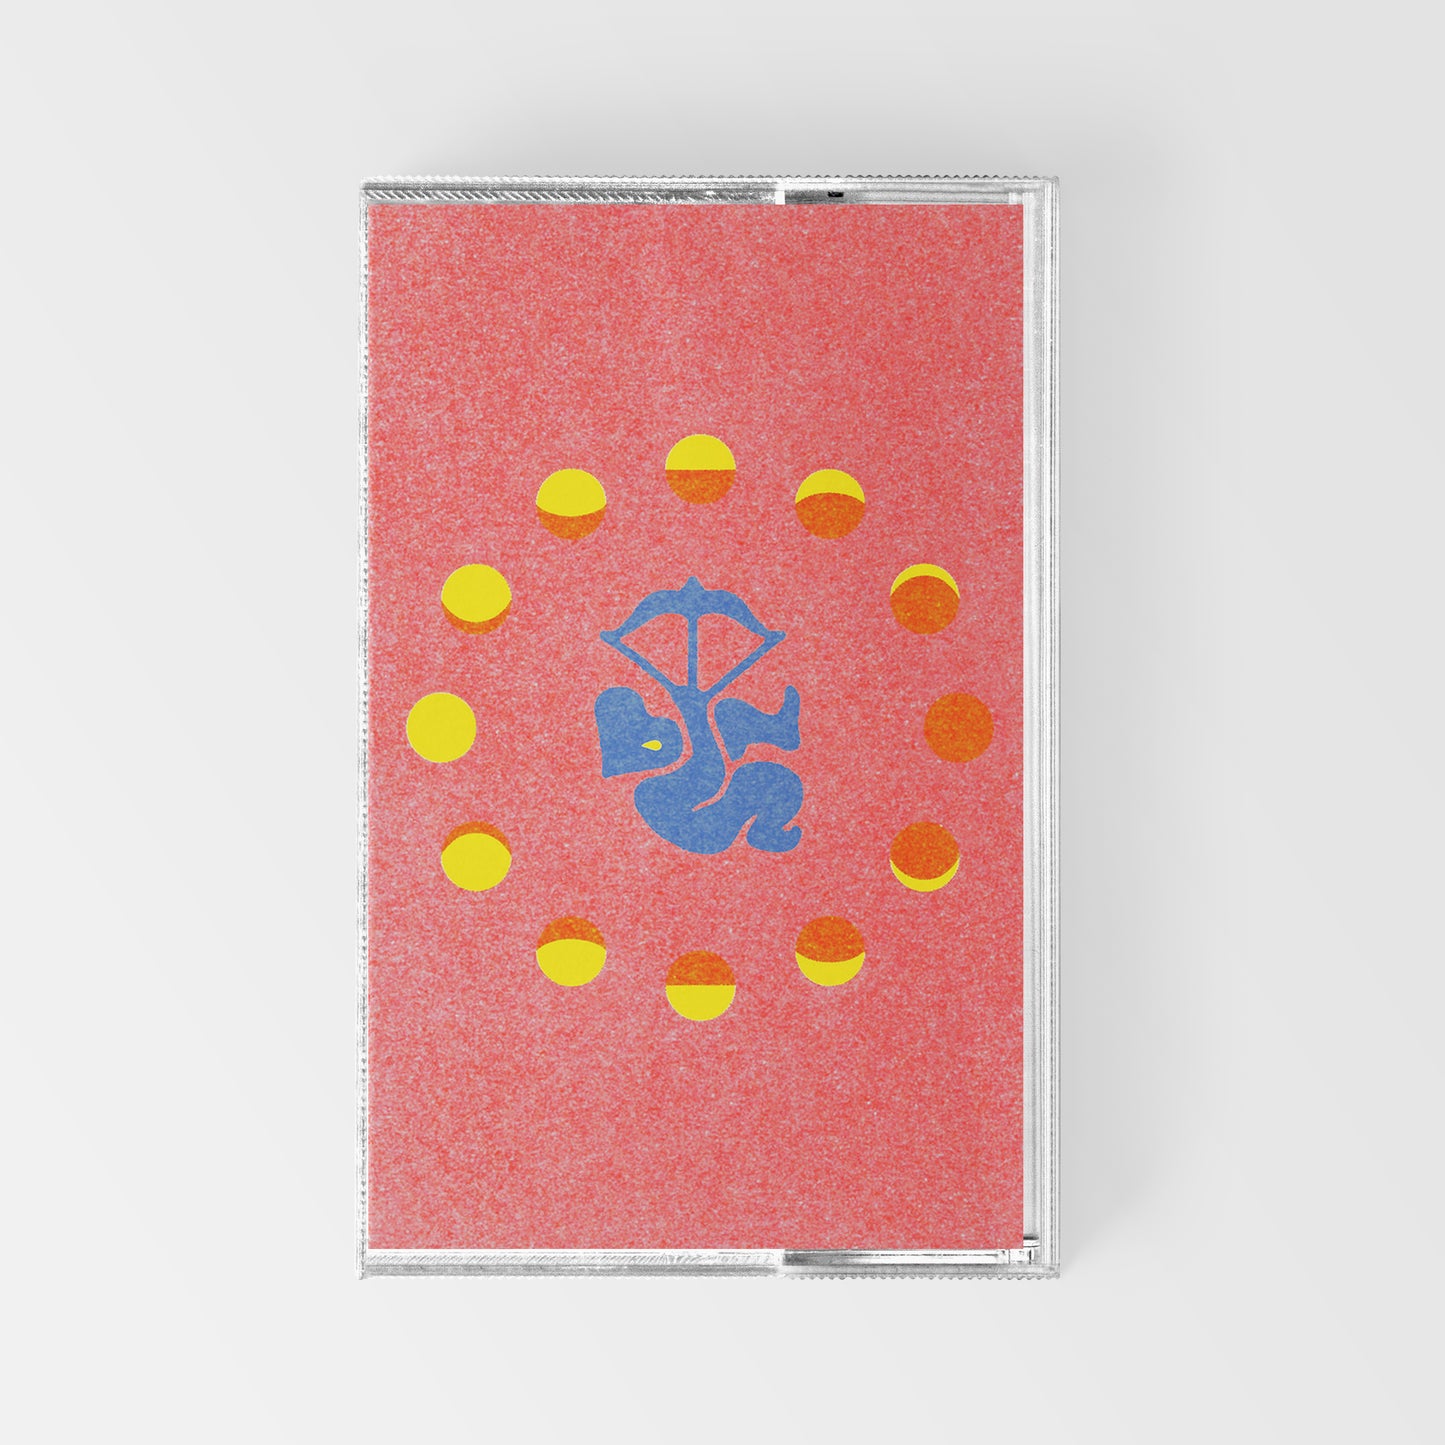 Promesses Vol. 2 cassette tape